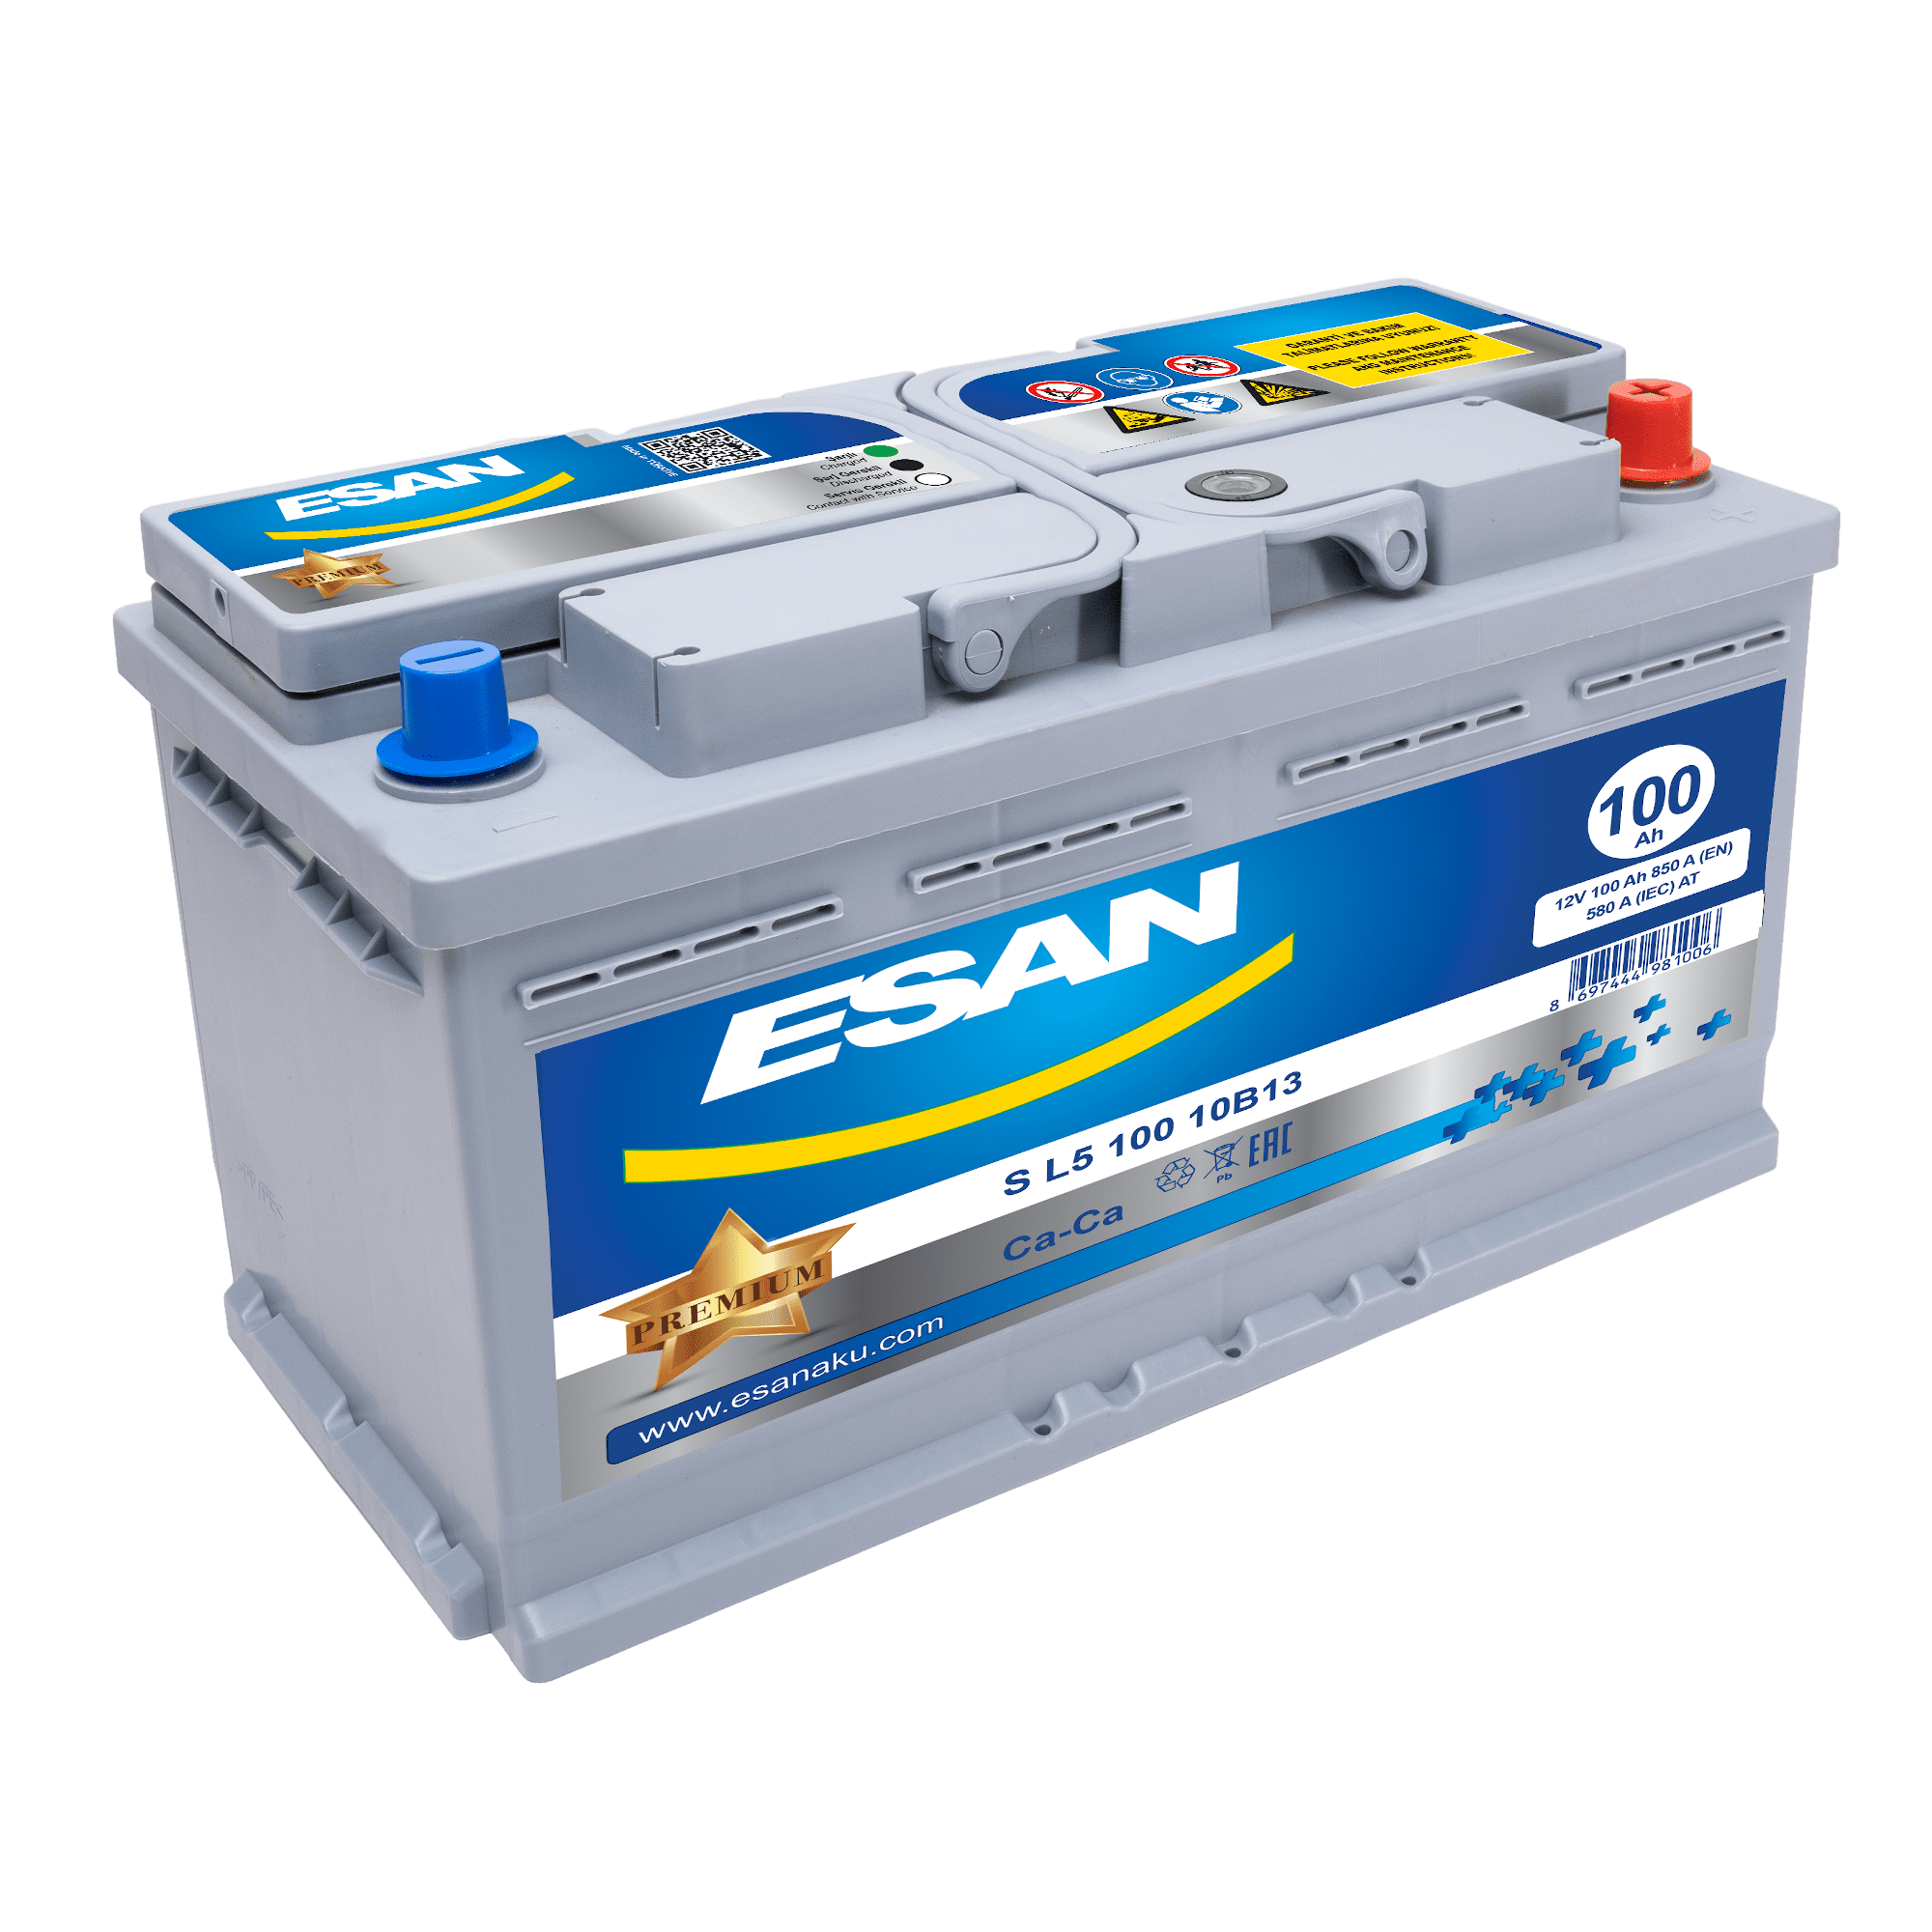 Автомобильная аккумуляторная батарея ESAN SMF S L5 100 10B13, 100 Ач, L5 DIN, 0/1